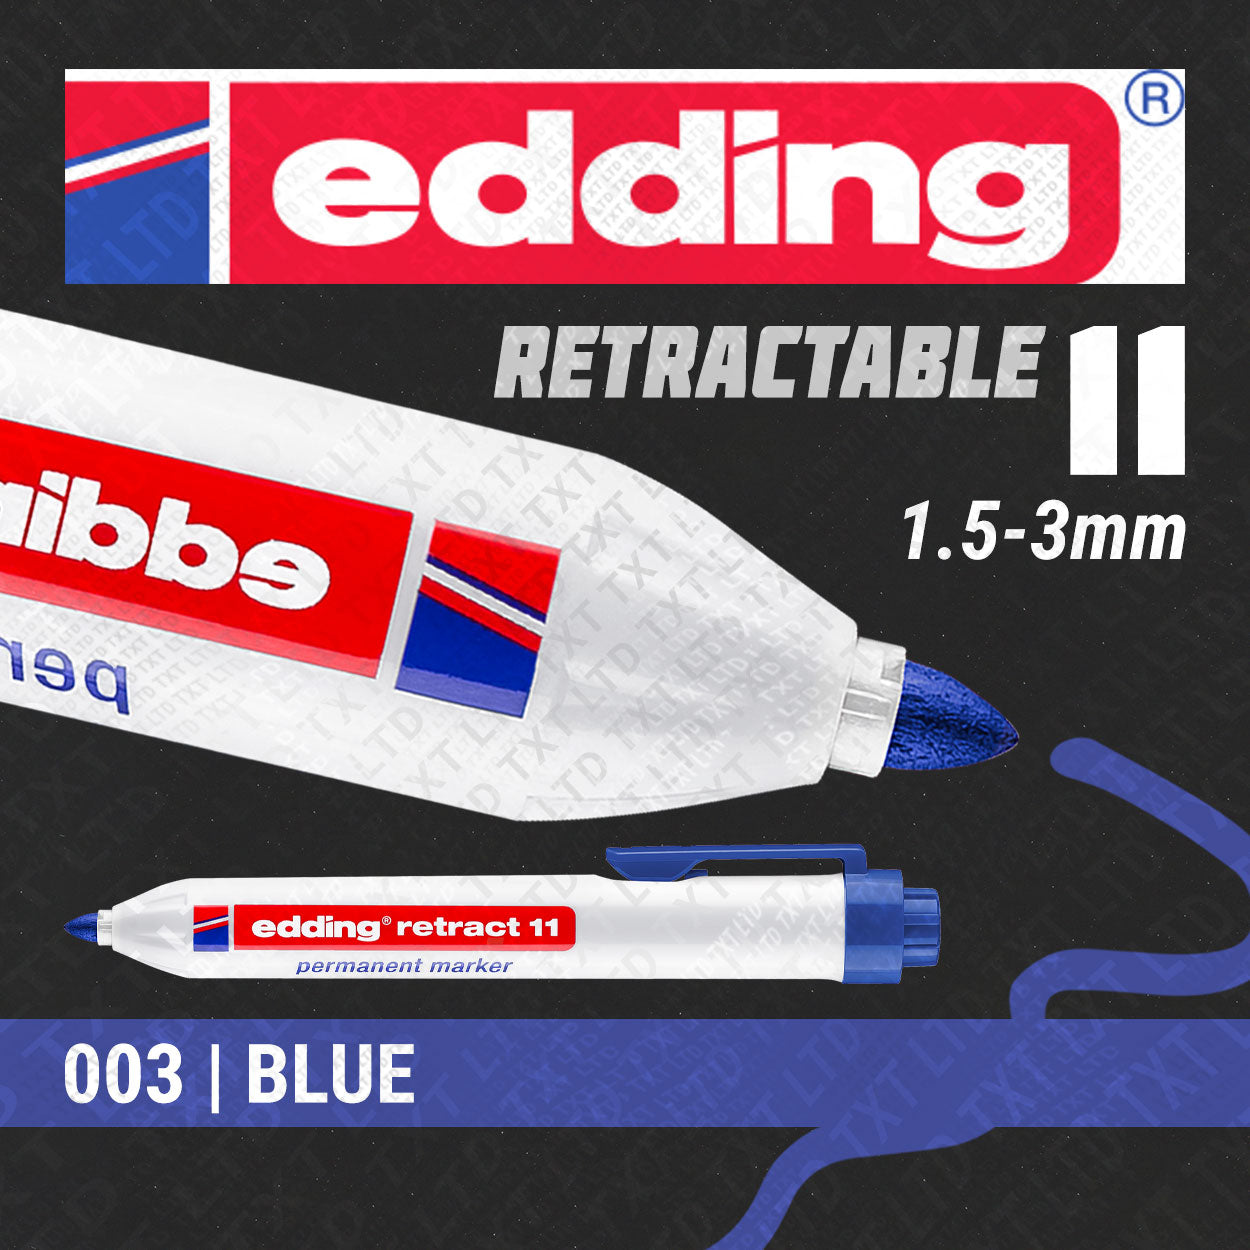 edding 11 Retract Permanent Marker 1.5-3mm